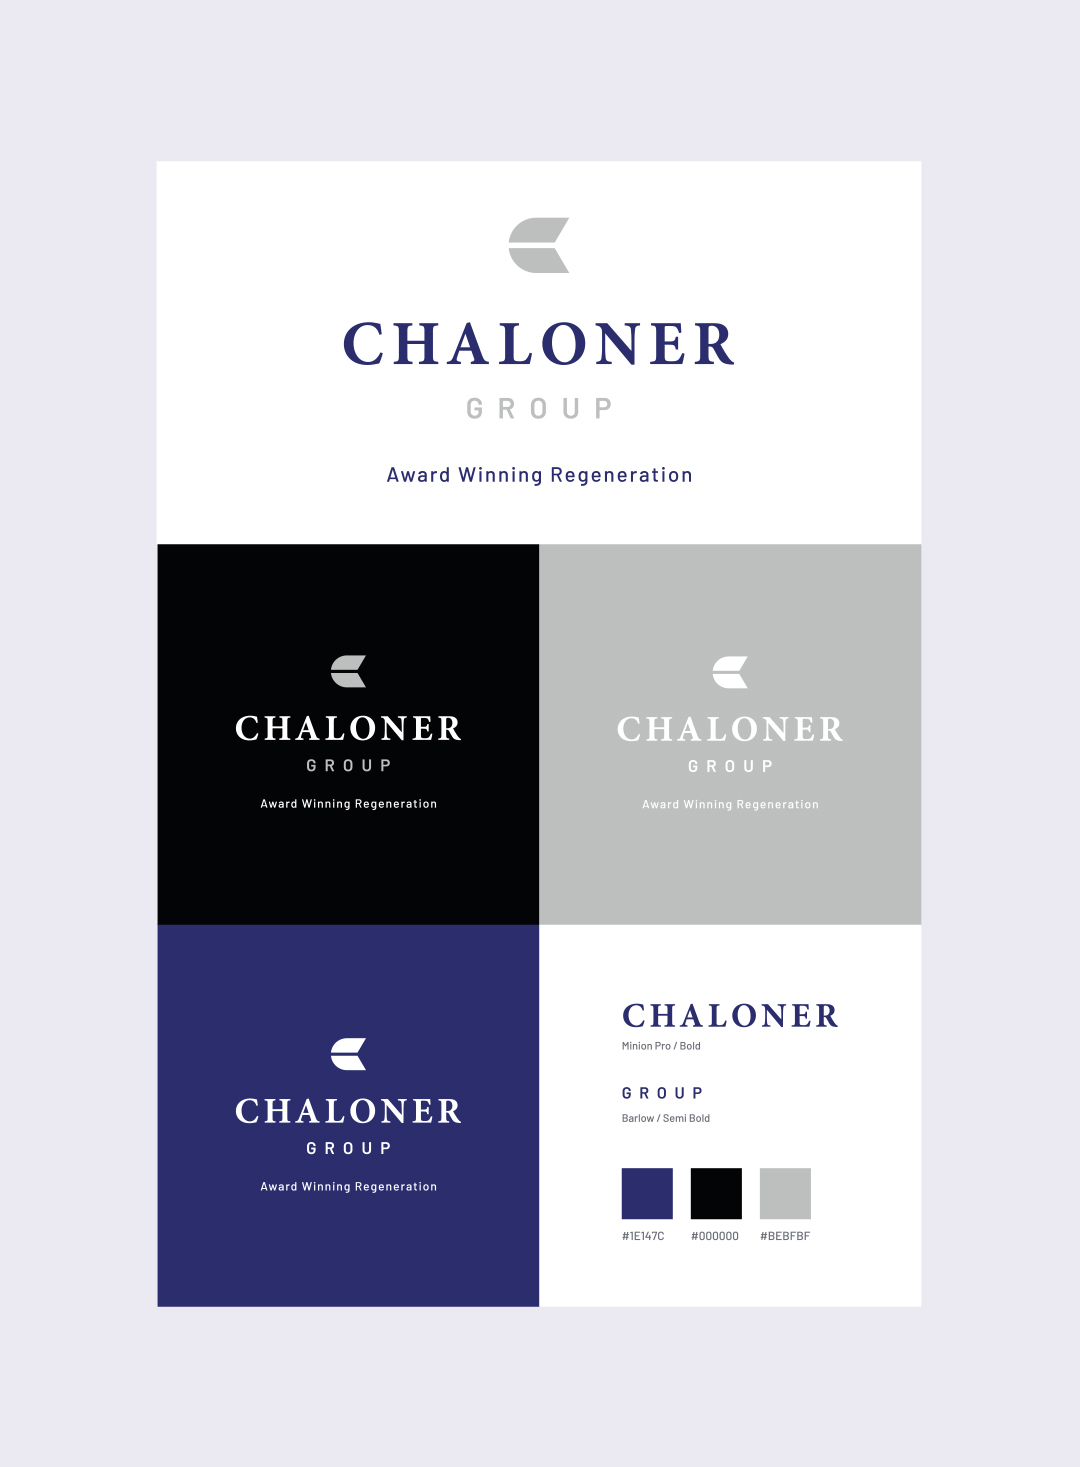 Chaloner Group screenshot